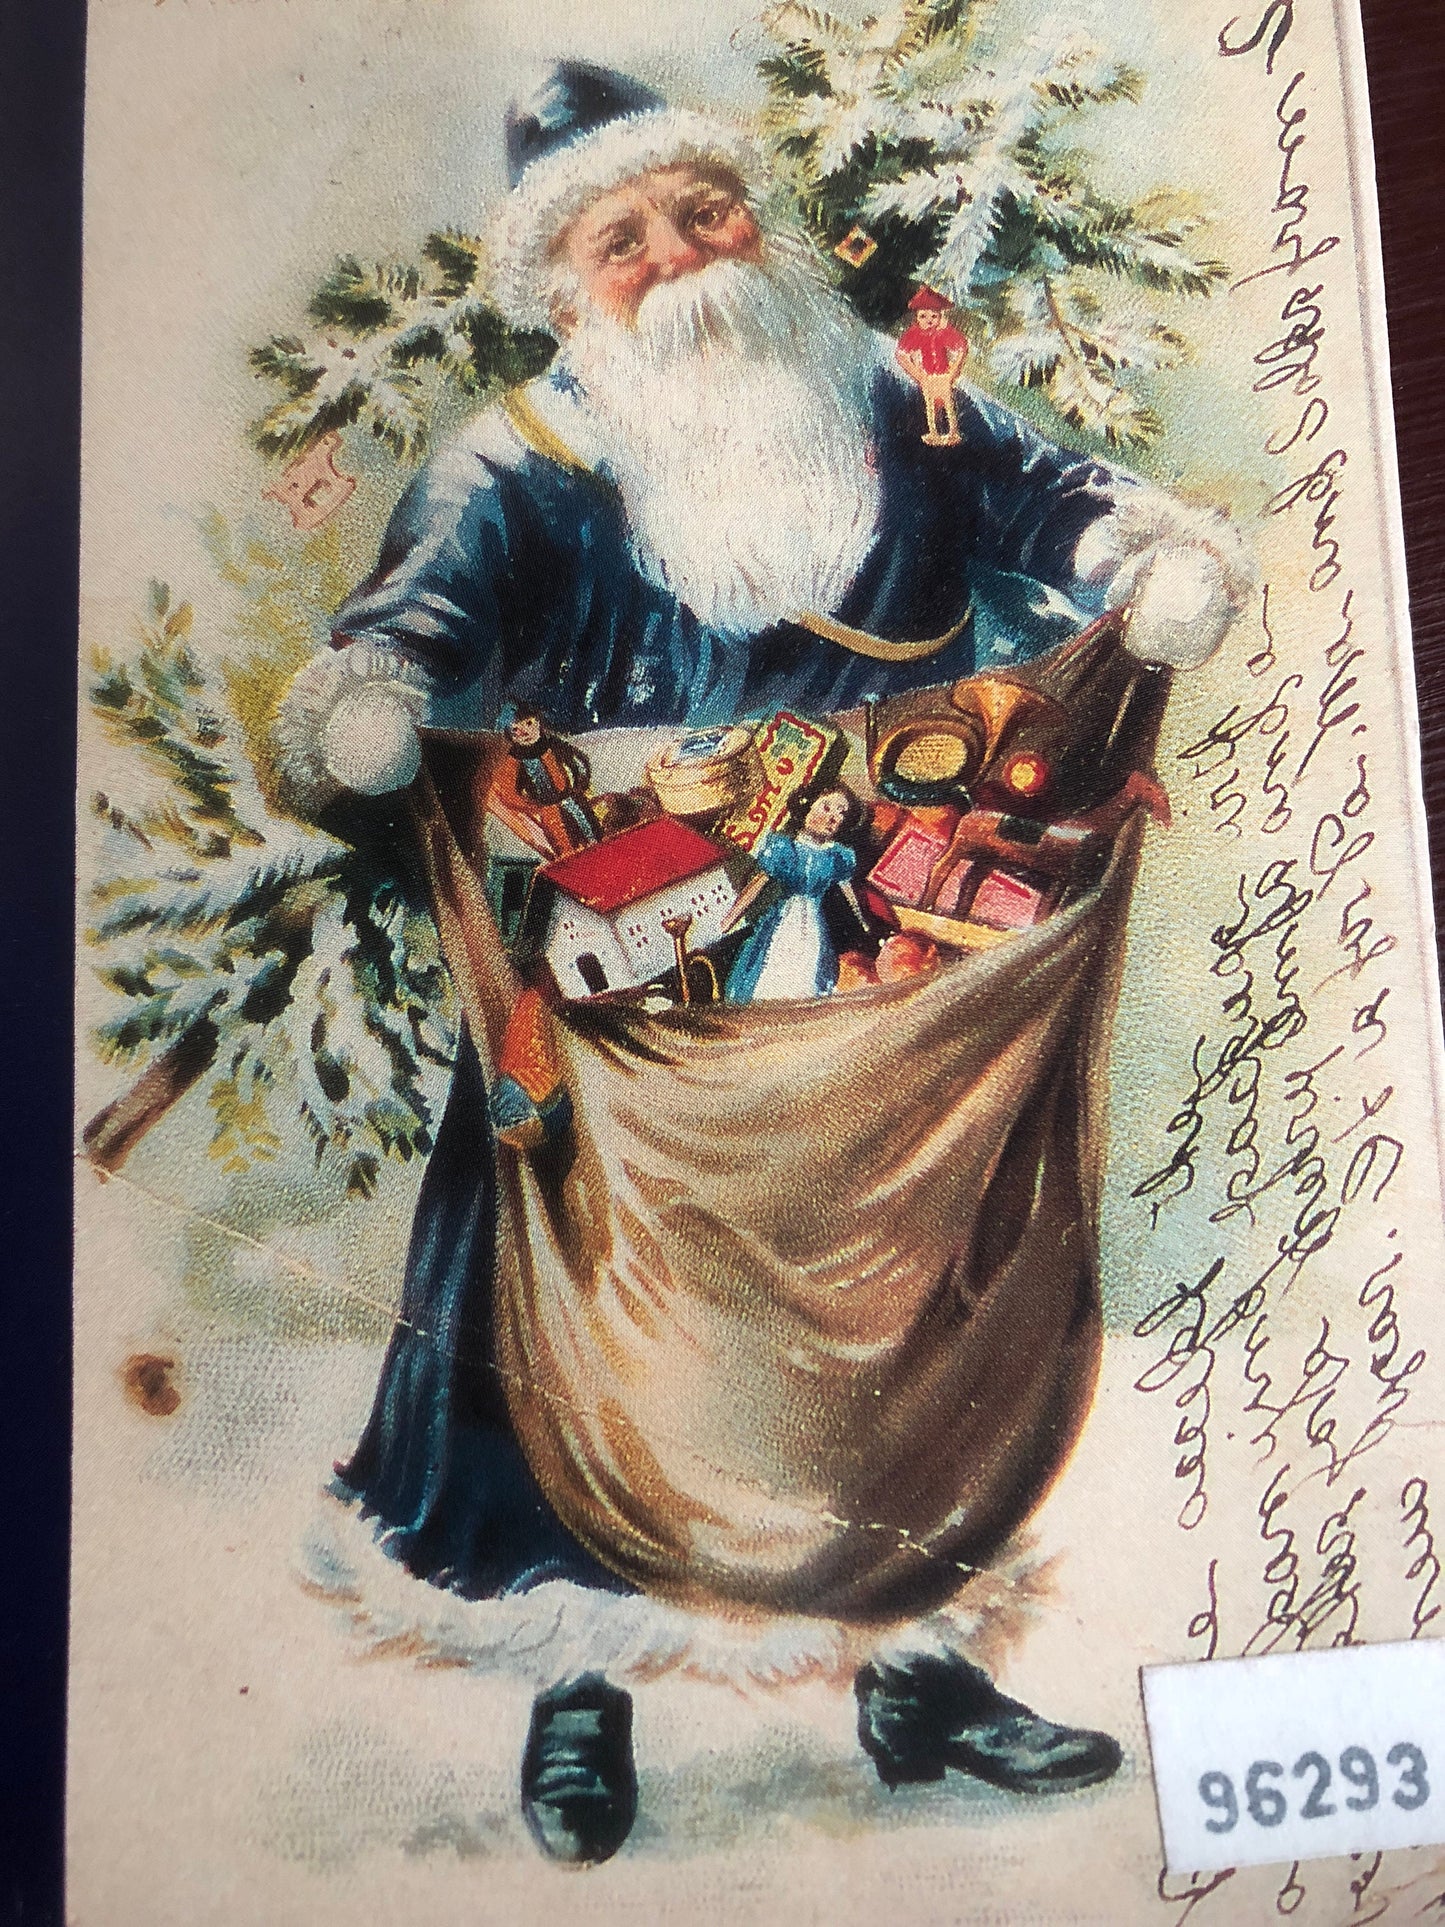 Sew Fine Presents, 1906 Toy Bag Santa, Olde Santas, Collection IX, L-22, Vintage 1989, Counted Cross Stitch Patterns